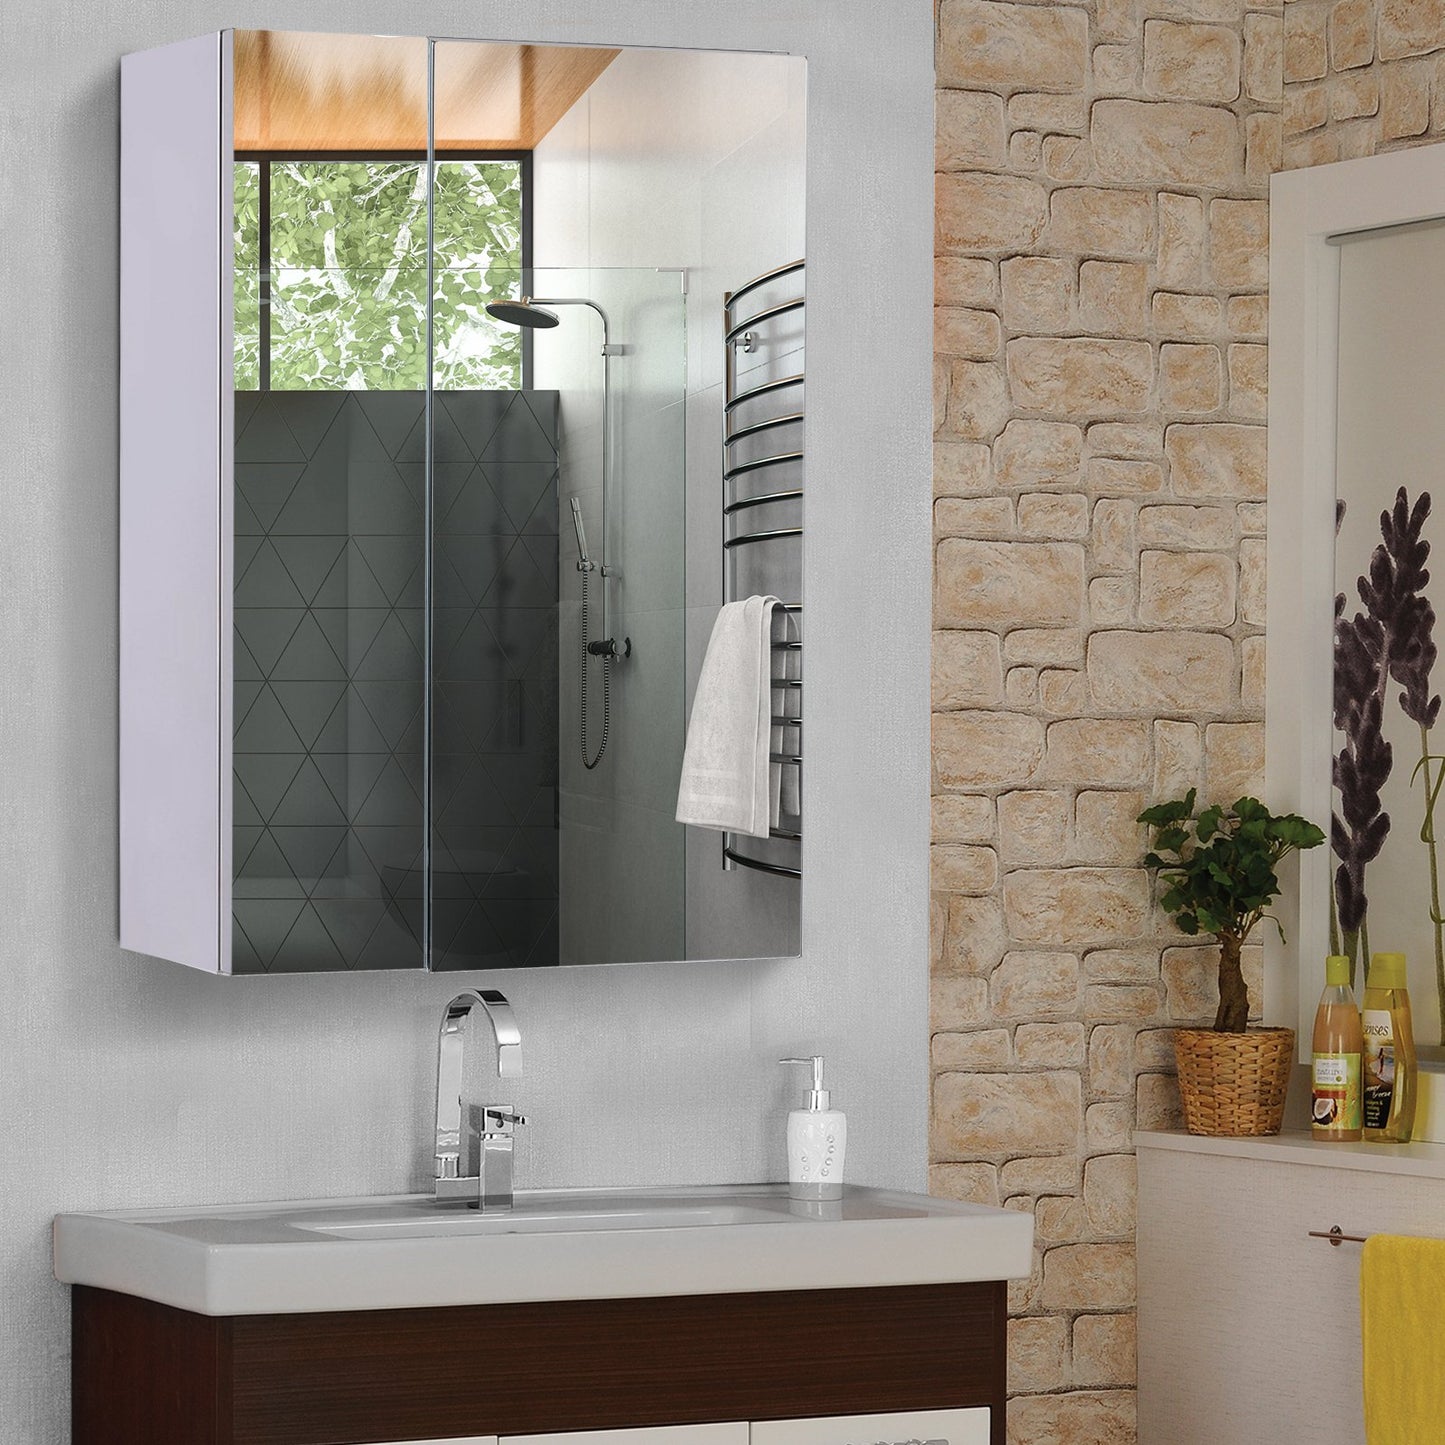 HOMCOM Wall mounted Bathroom Mirror Storage Cabinet Double Doors Stainless Steel, 59x43x16 cm